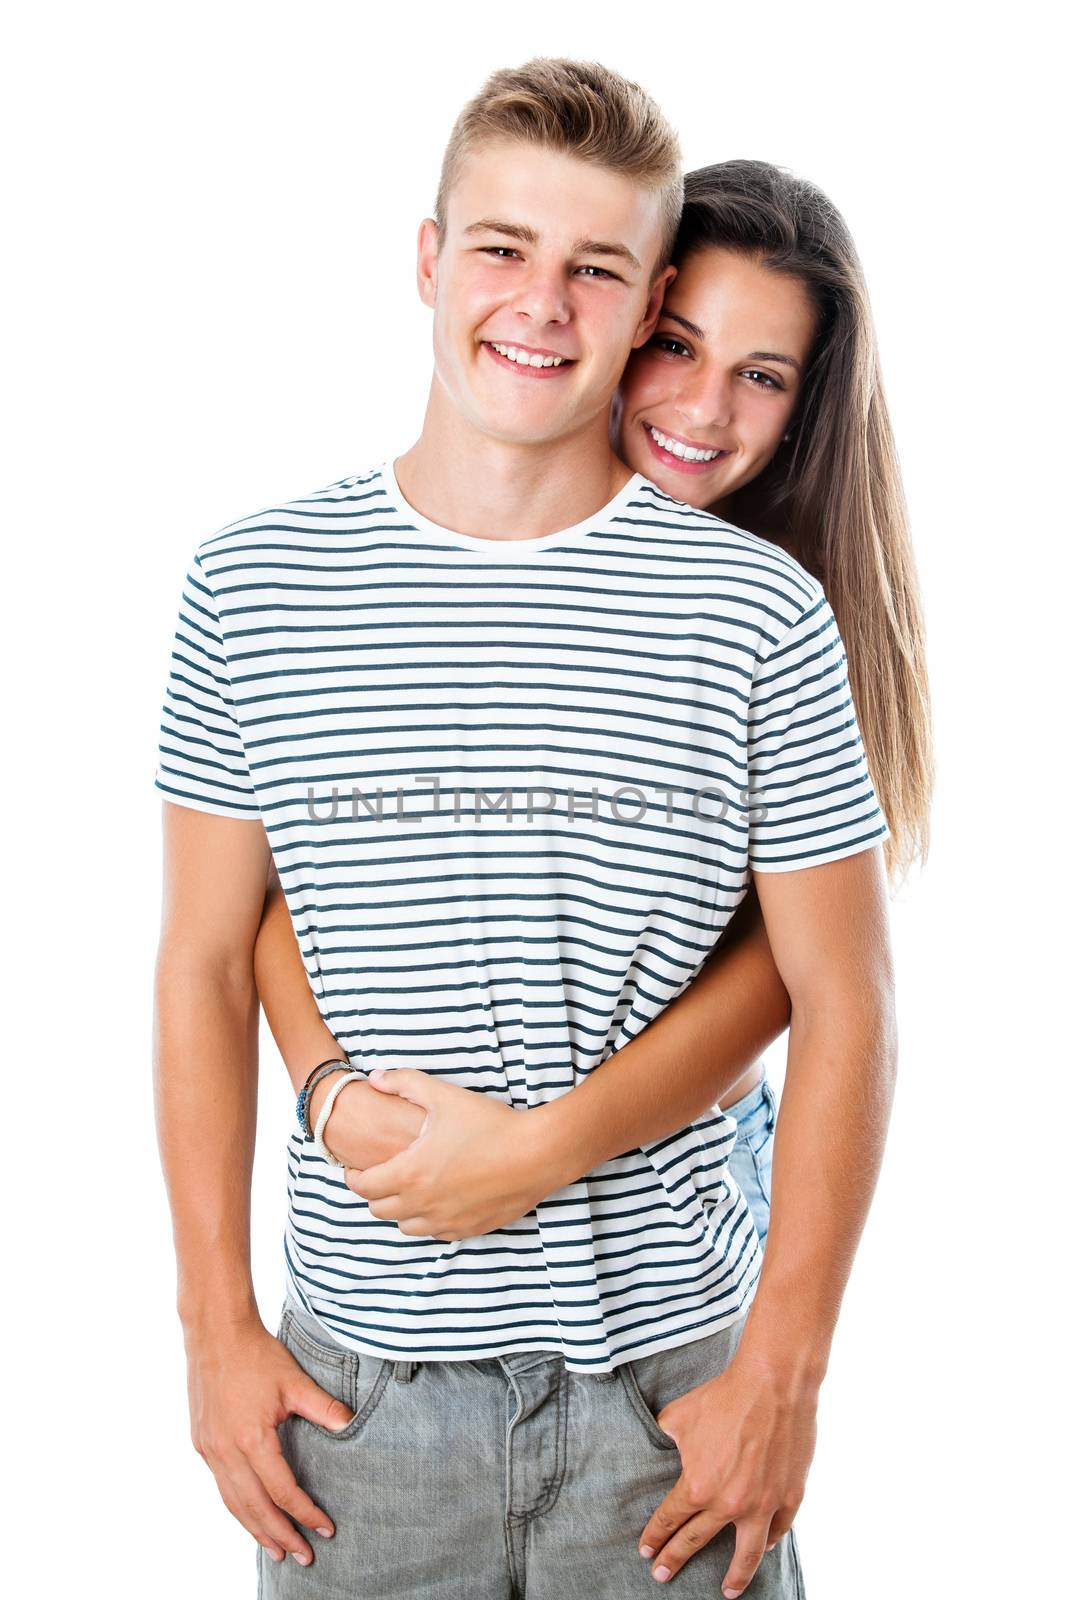 Cute teen couple embracing. by karelnoppe